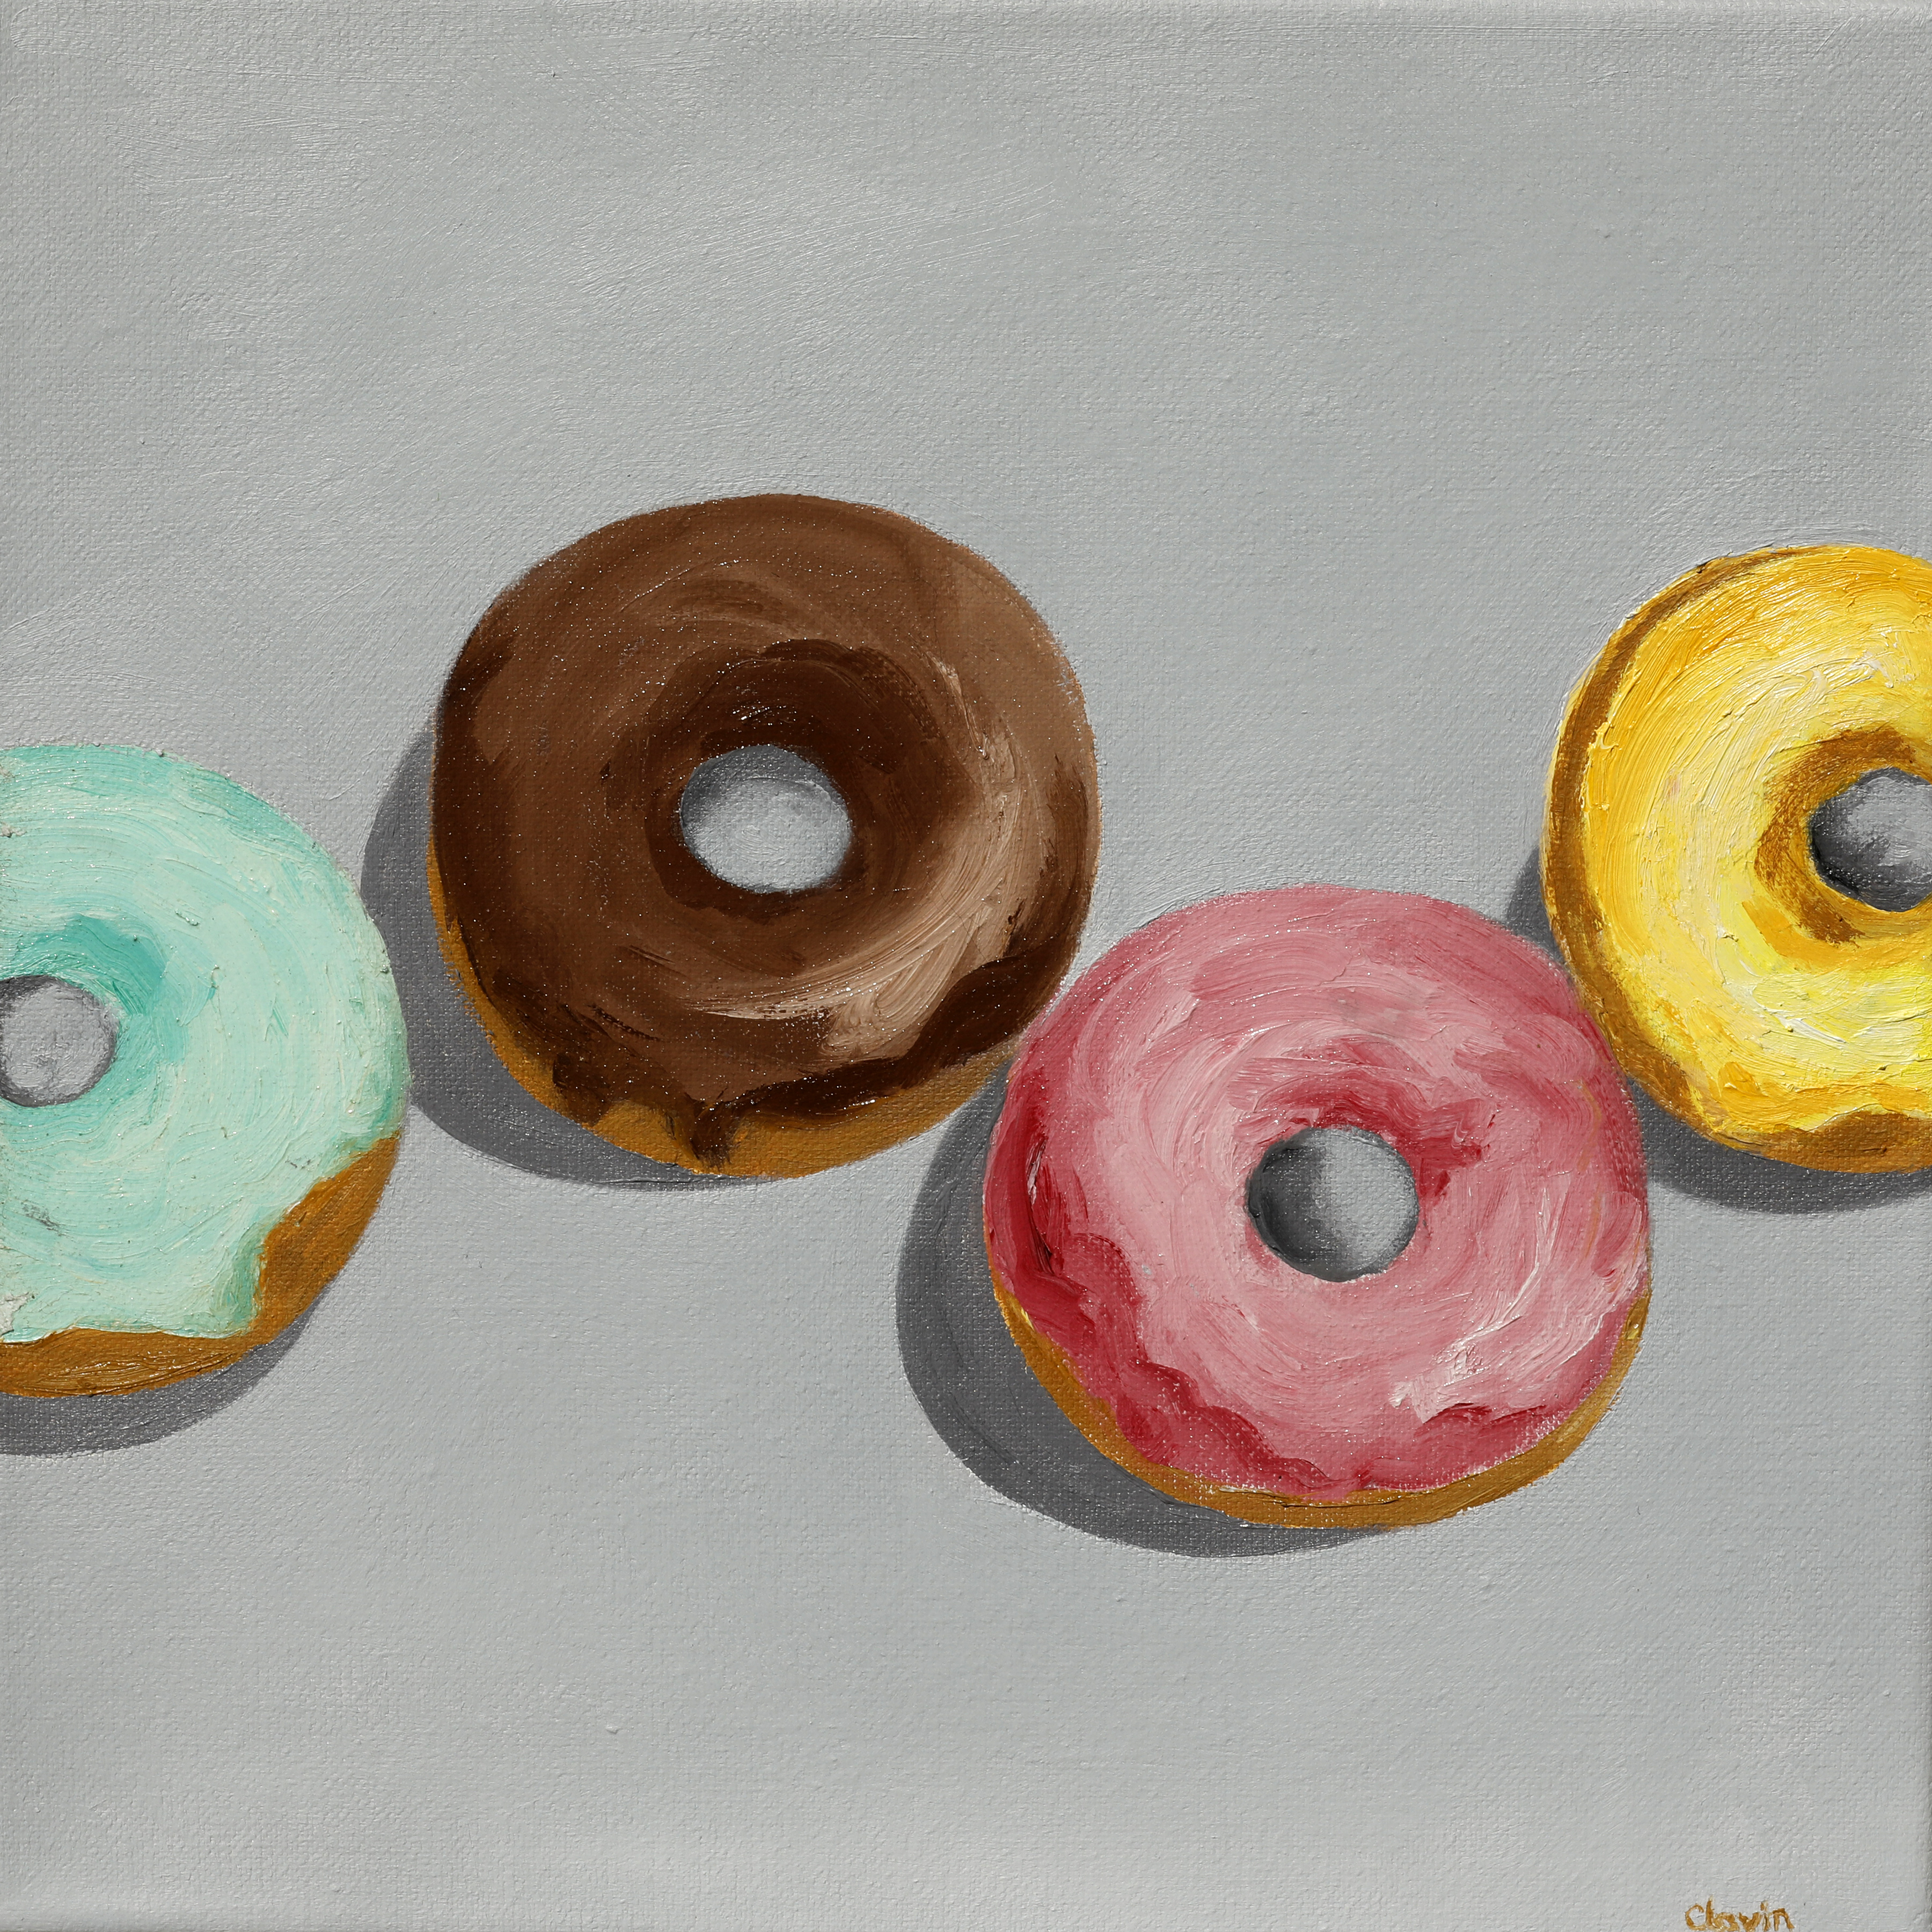 Donuts grey background 12x12  $200.00